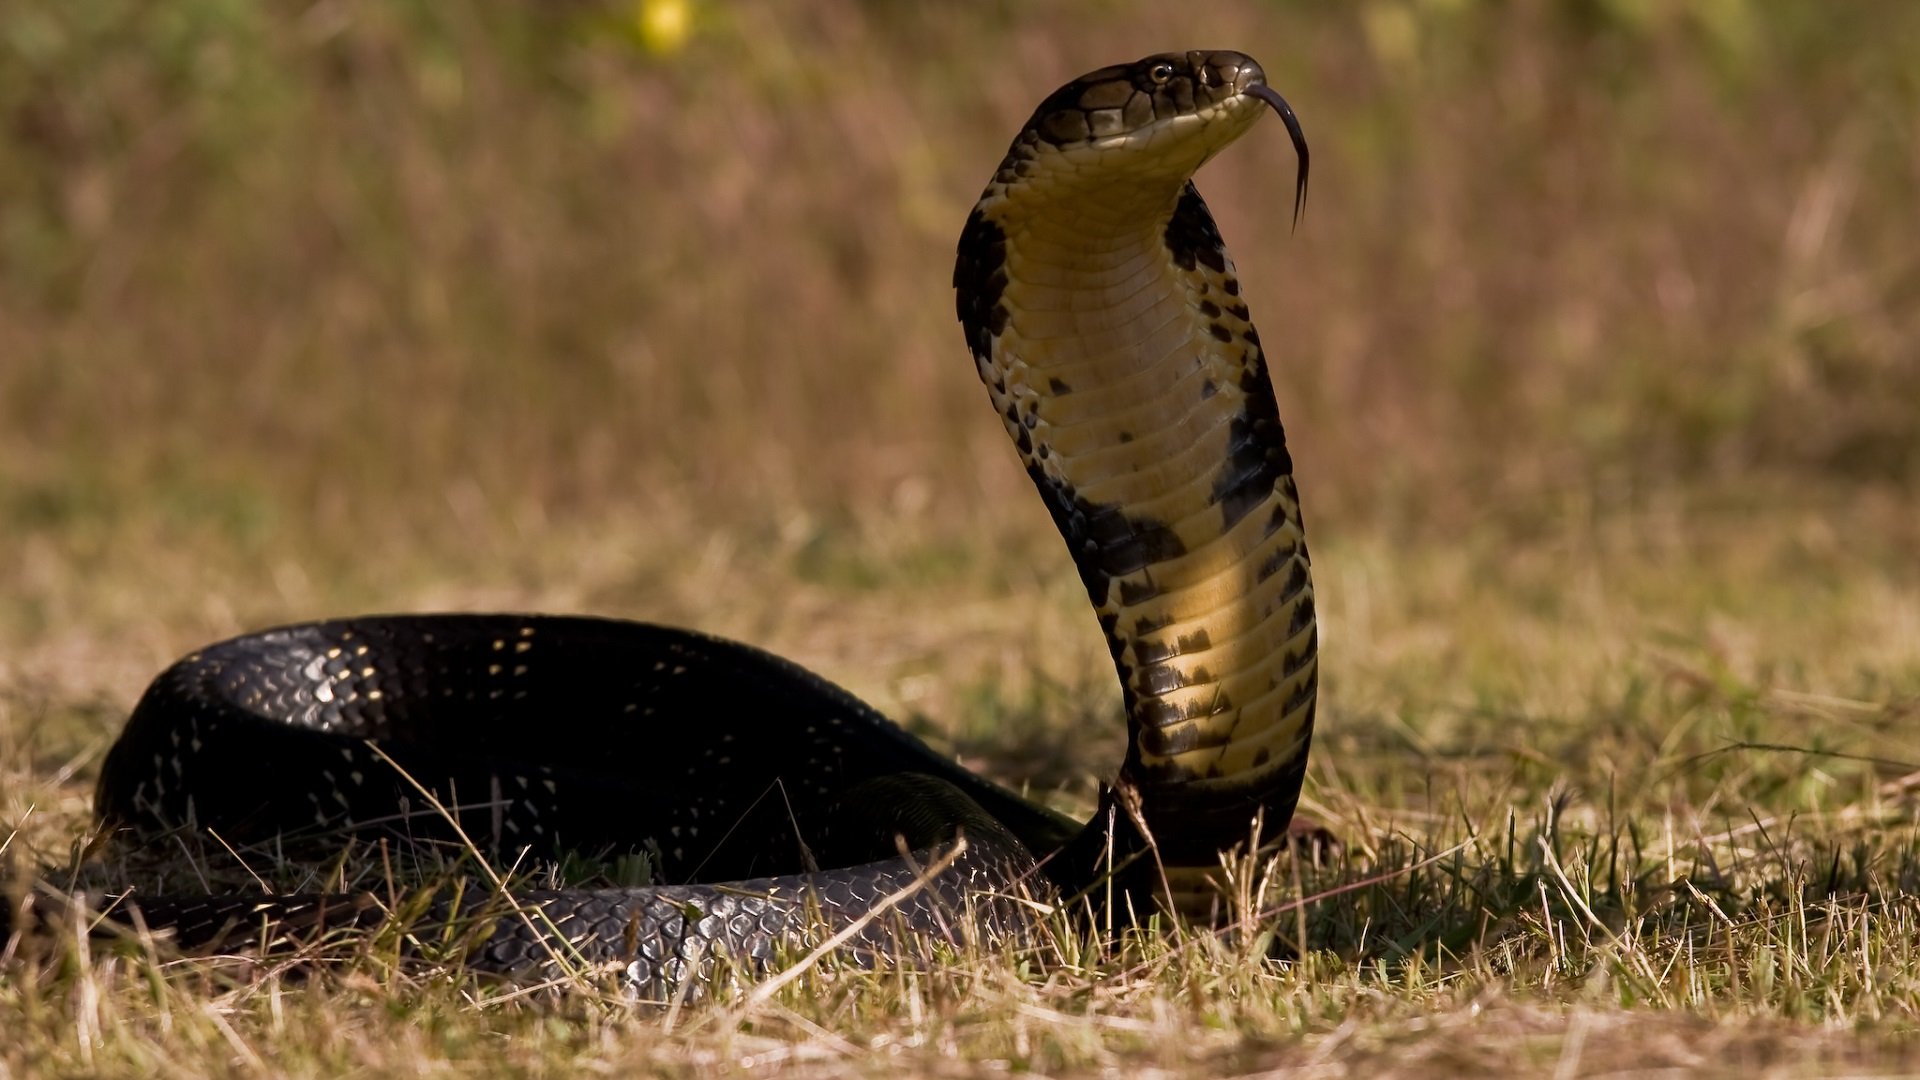 fond d'écran de serpent,serpent,reptile,roi cobra,animal terrestre,elapidae